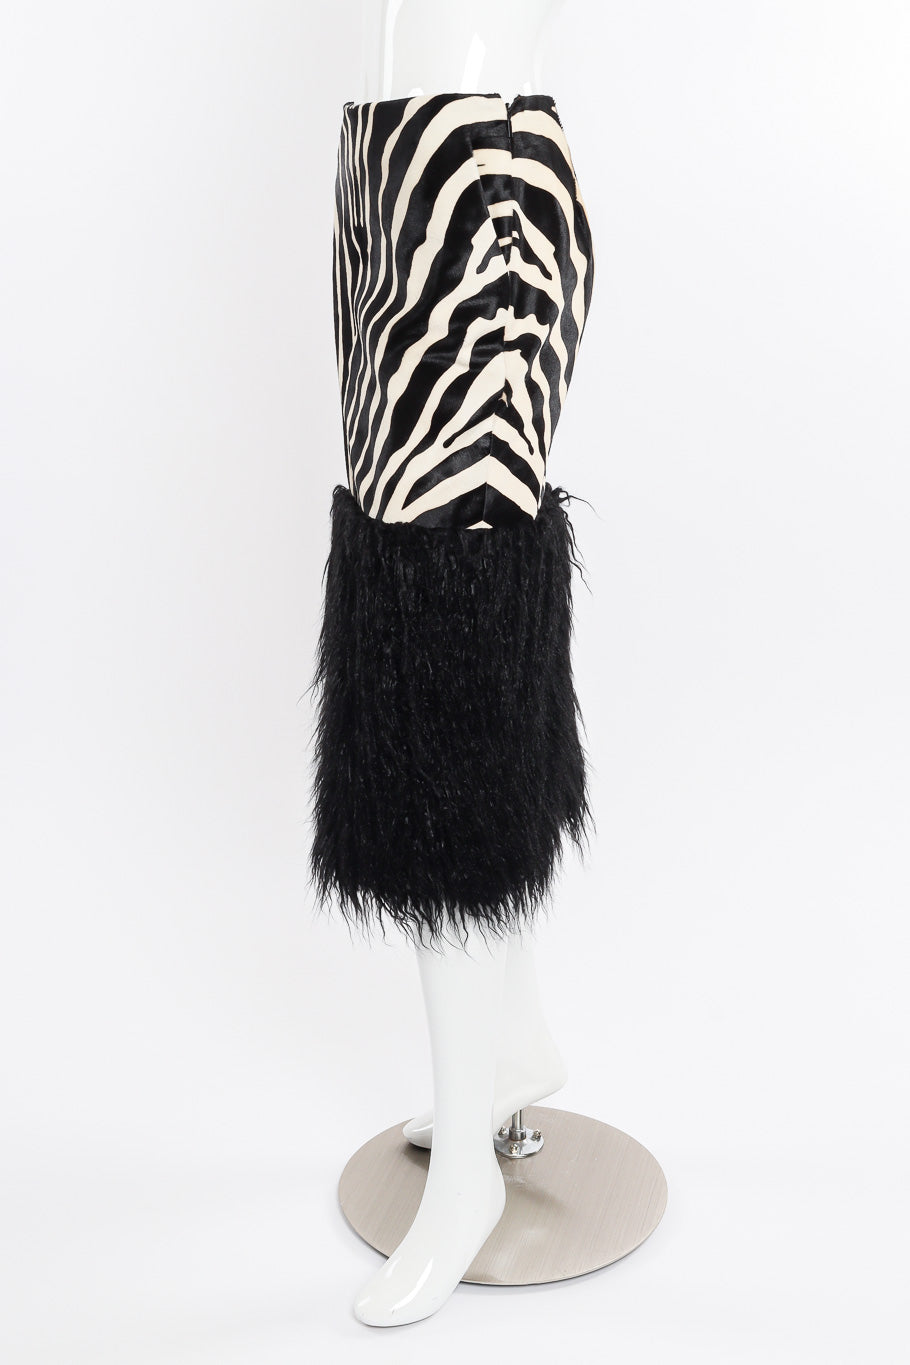 Saint Laurent 2019 F/W Zebra Print Midi Skirt side view on mannequin @Recessla